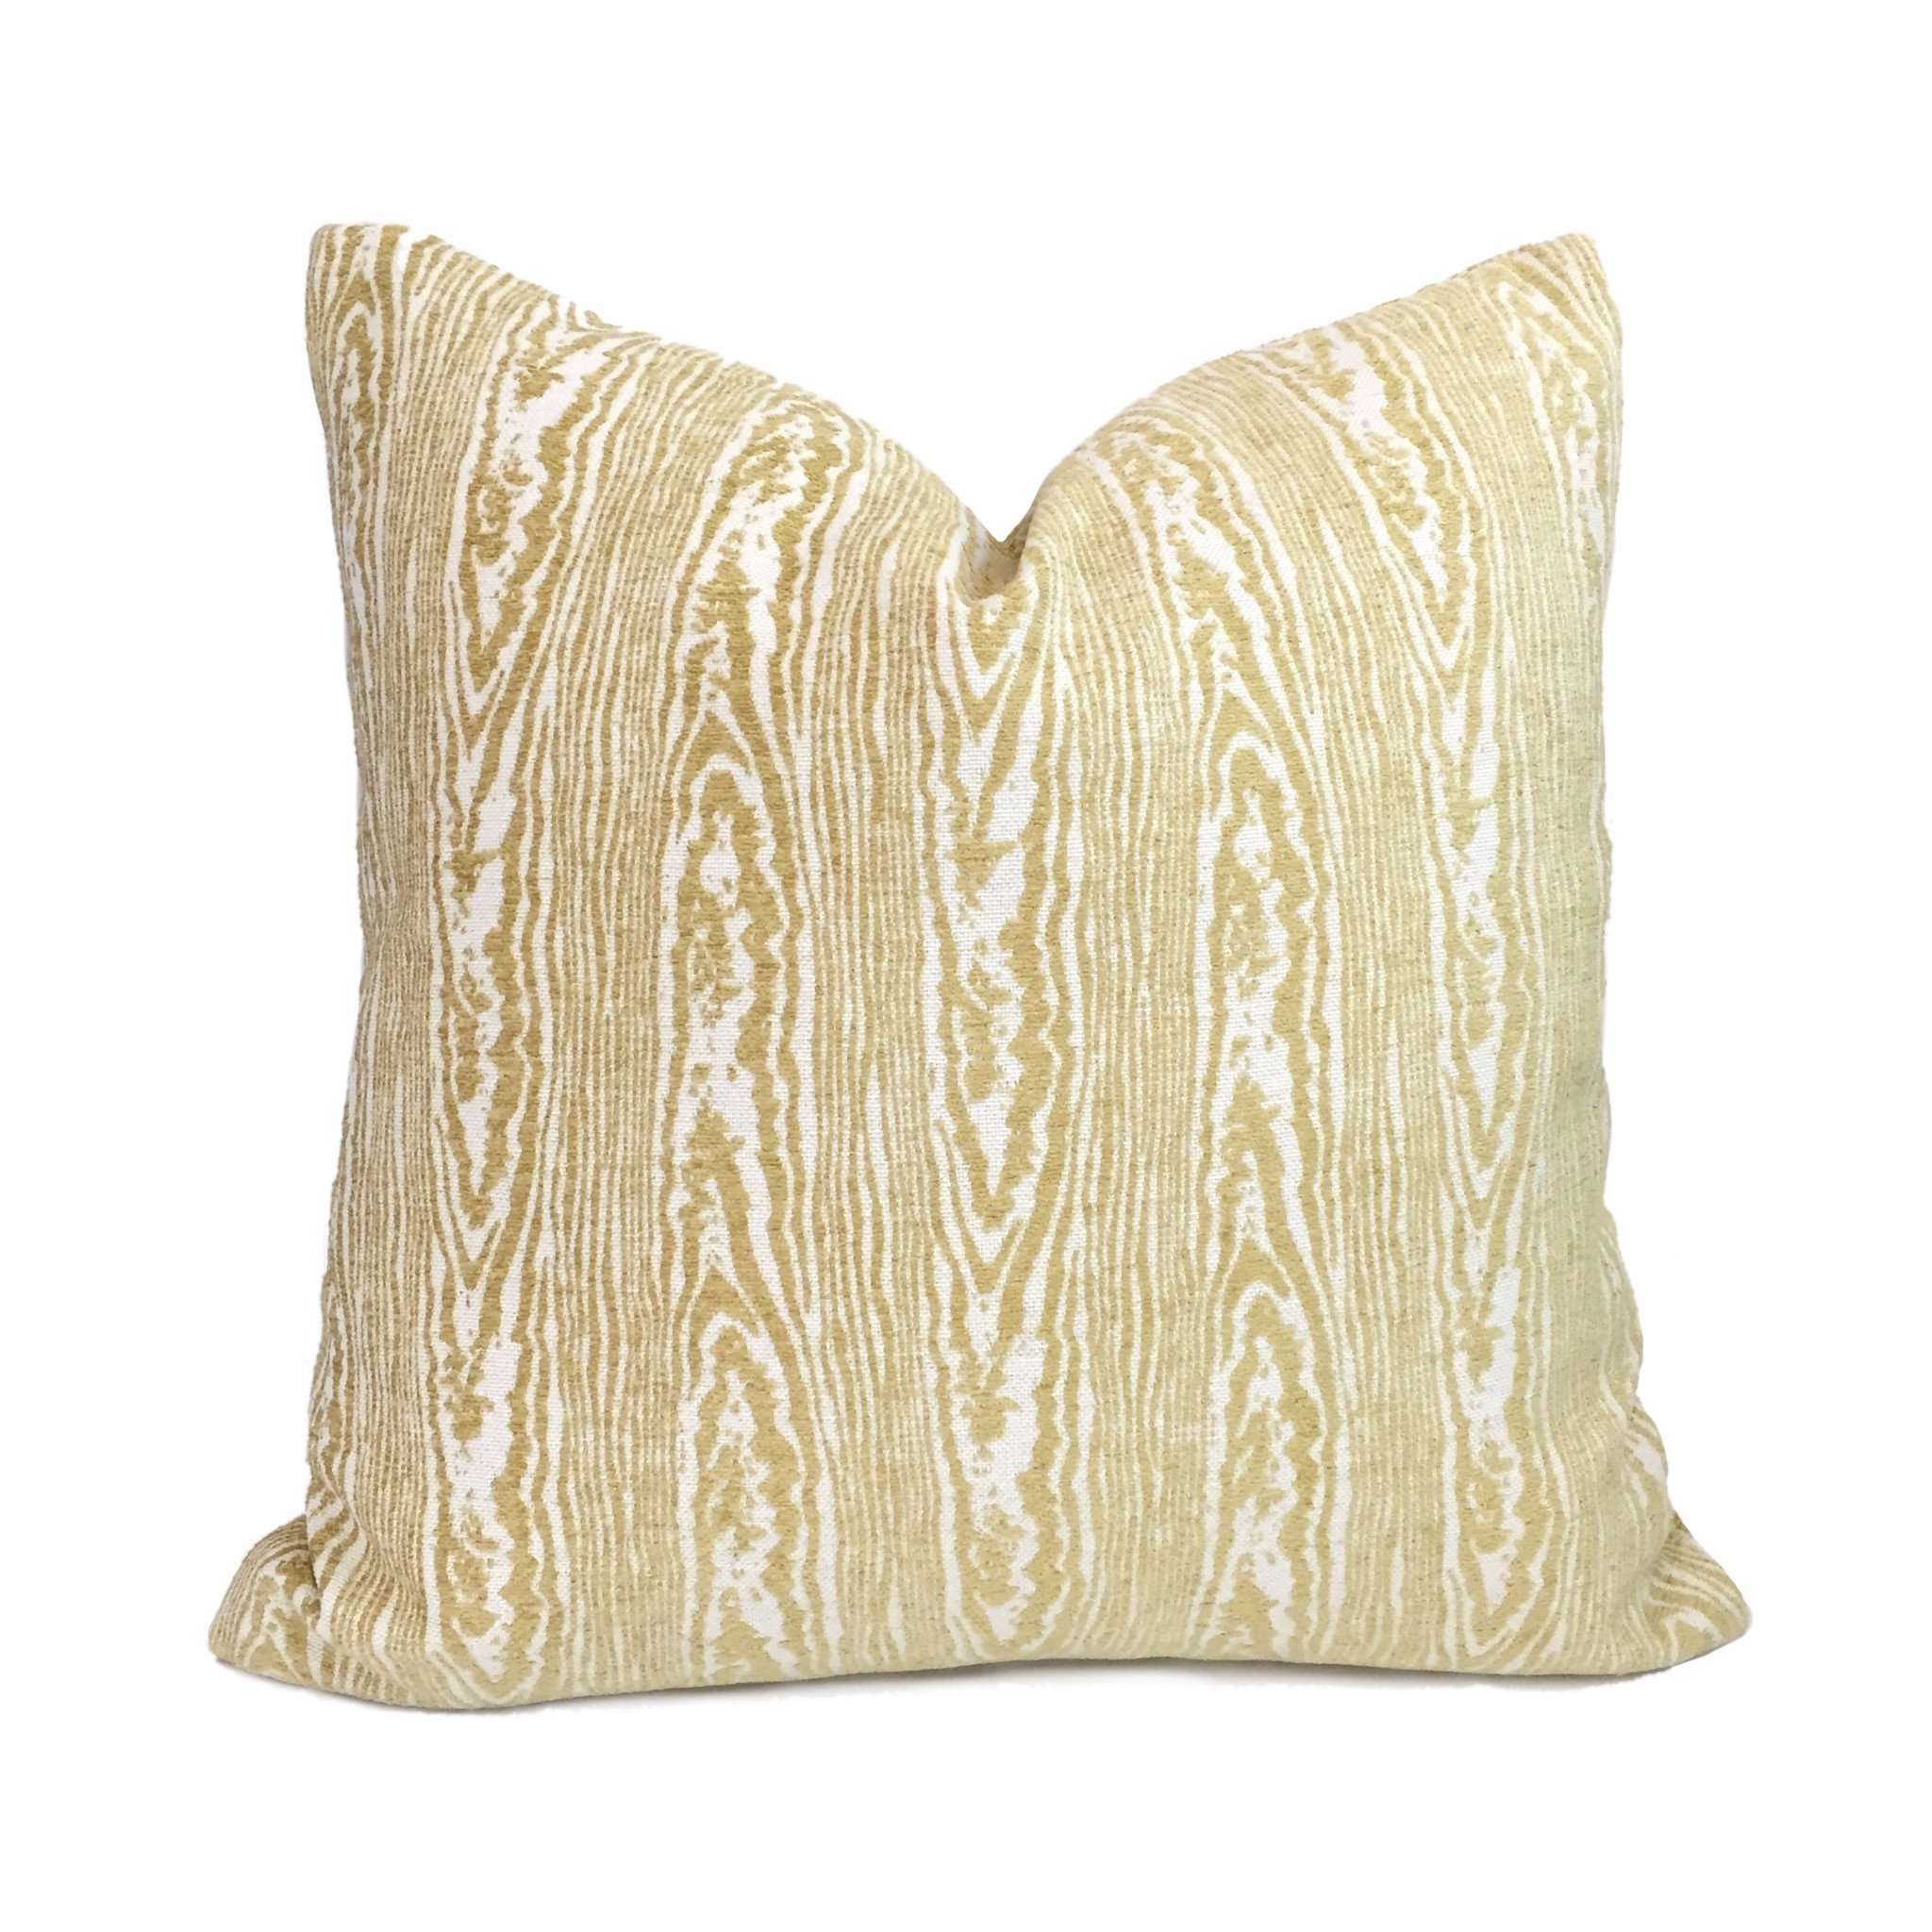 Suburban Home Citron Yellow Faux Bois Woodgrain Pattern Texture Upholstery Pillow Cover Cushion Pillow Case Euro Sham 16x16 18x18 20x20 22x22 24x24 26x26 28x28 Lumbar Pillow 12x18 12x20 12x24 14x20 16x26 by Aloriam